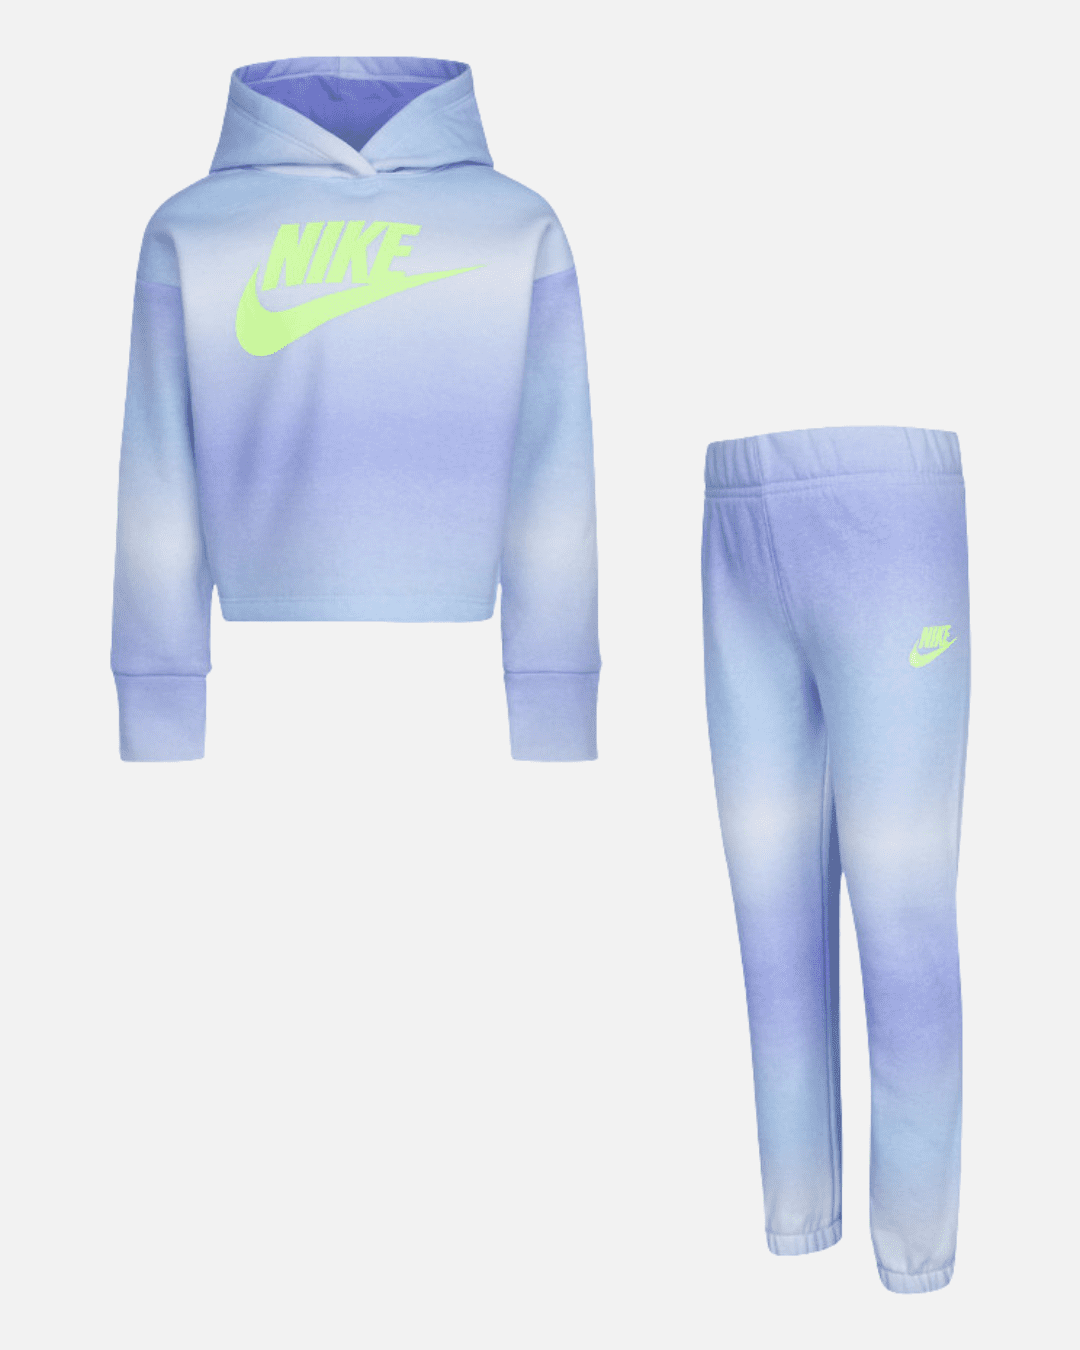 Nike Sportswear Kids Tracksuit Set - Blue/White – Footkorner